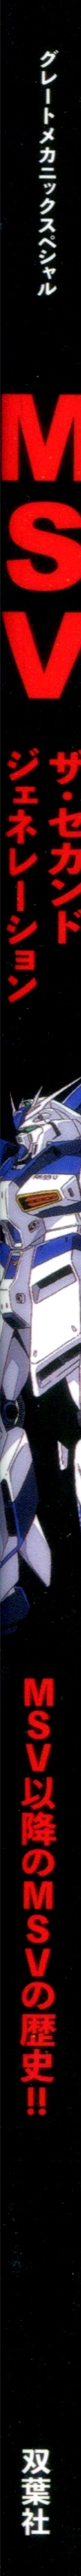 Mobile Suit Gundam - MSV The Second - Generation 1986-1993 117